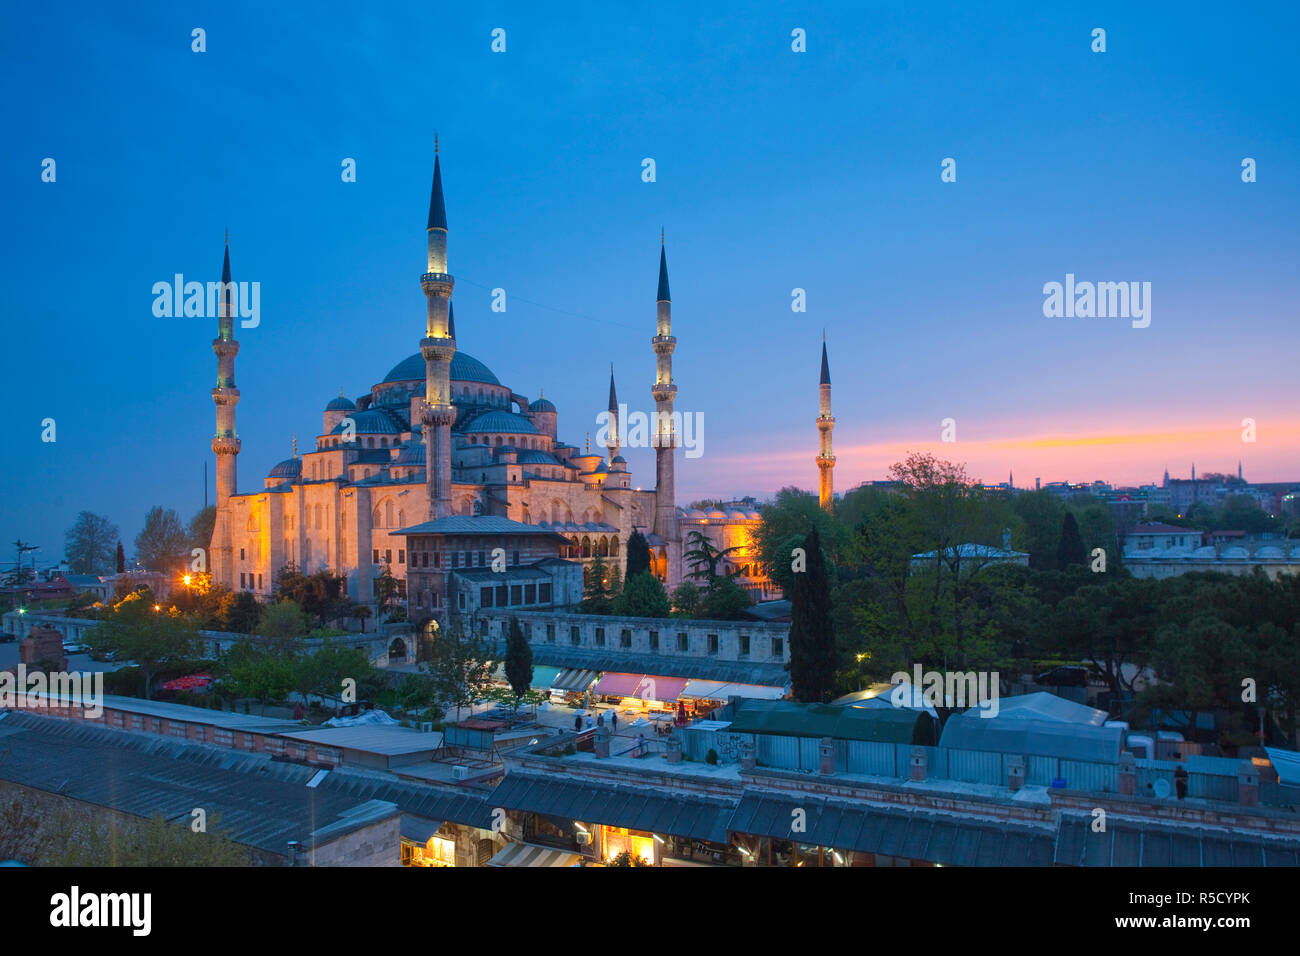 La Moschea Blu (Sultan Ahmet Camii), Sultanahmet, Istanbul, Turchia Foto Stock